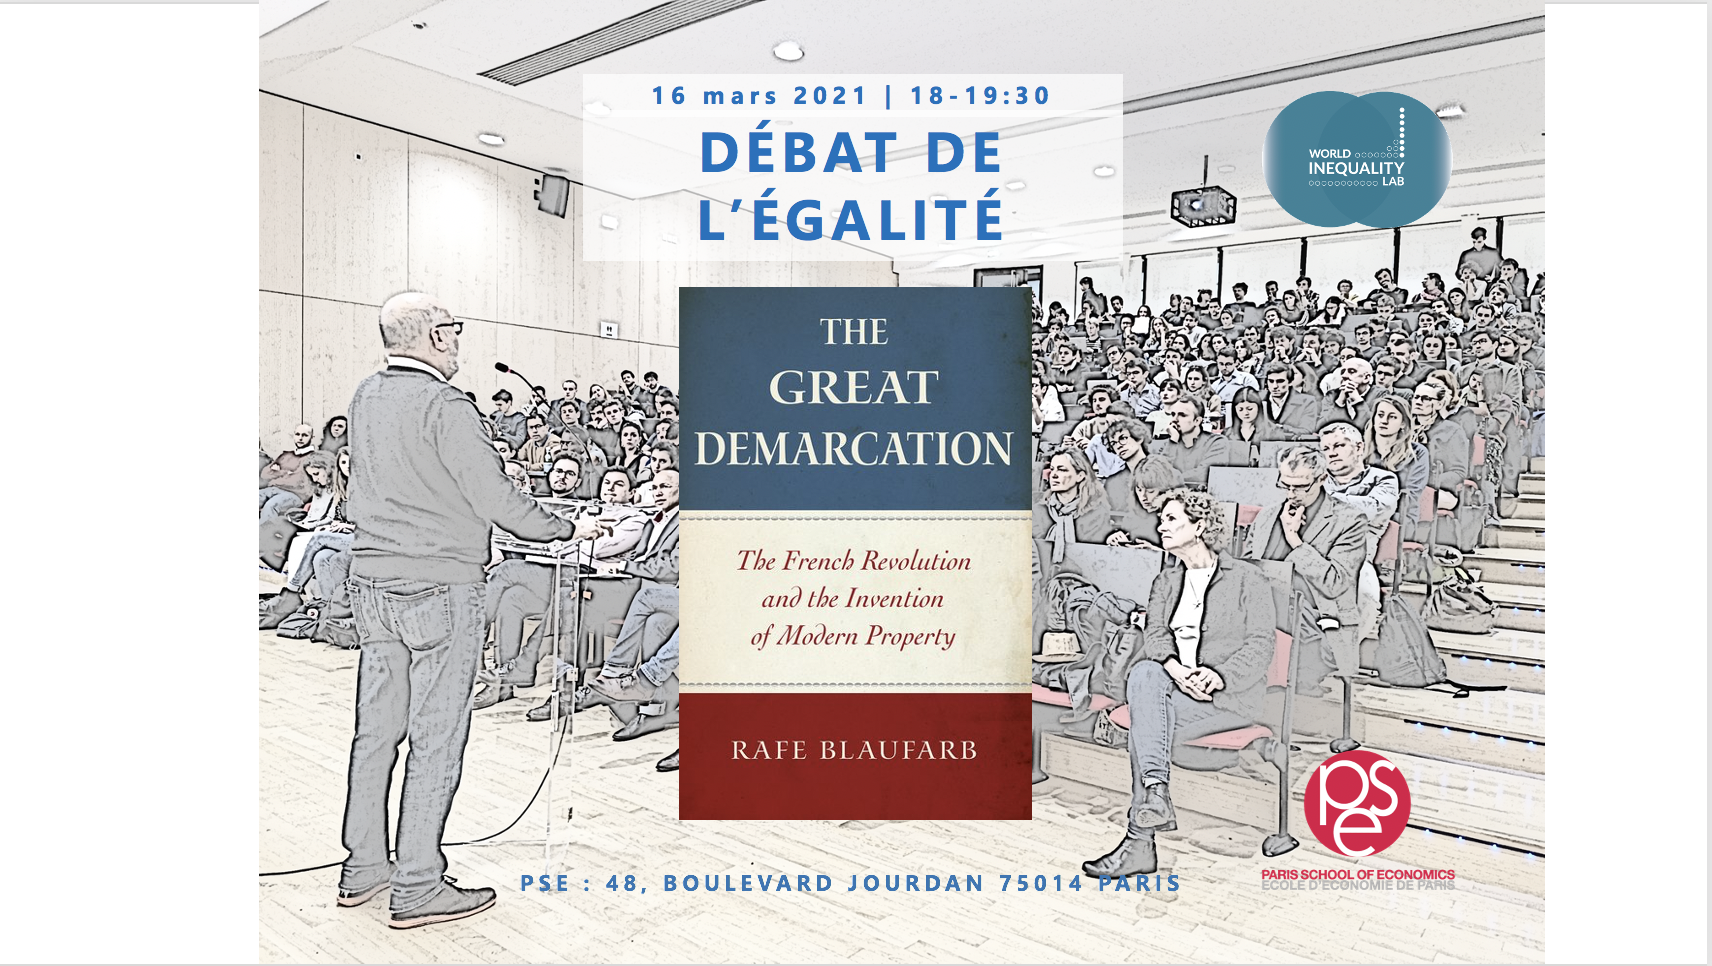 The Great Demarcation", by Rafe Blaufarb